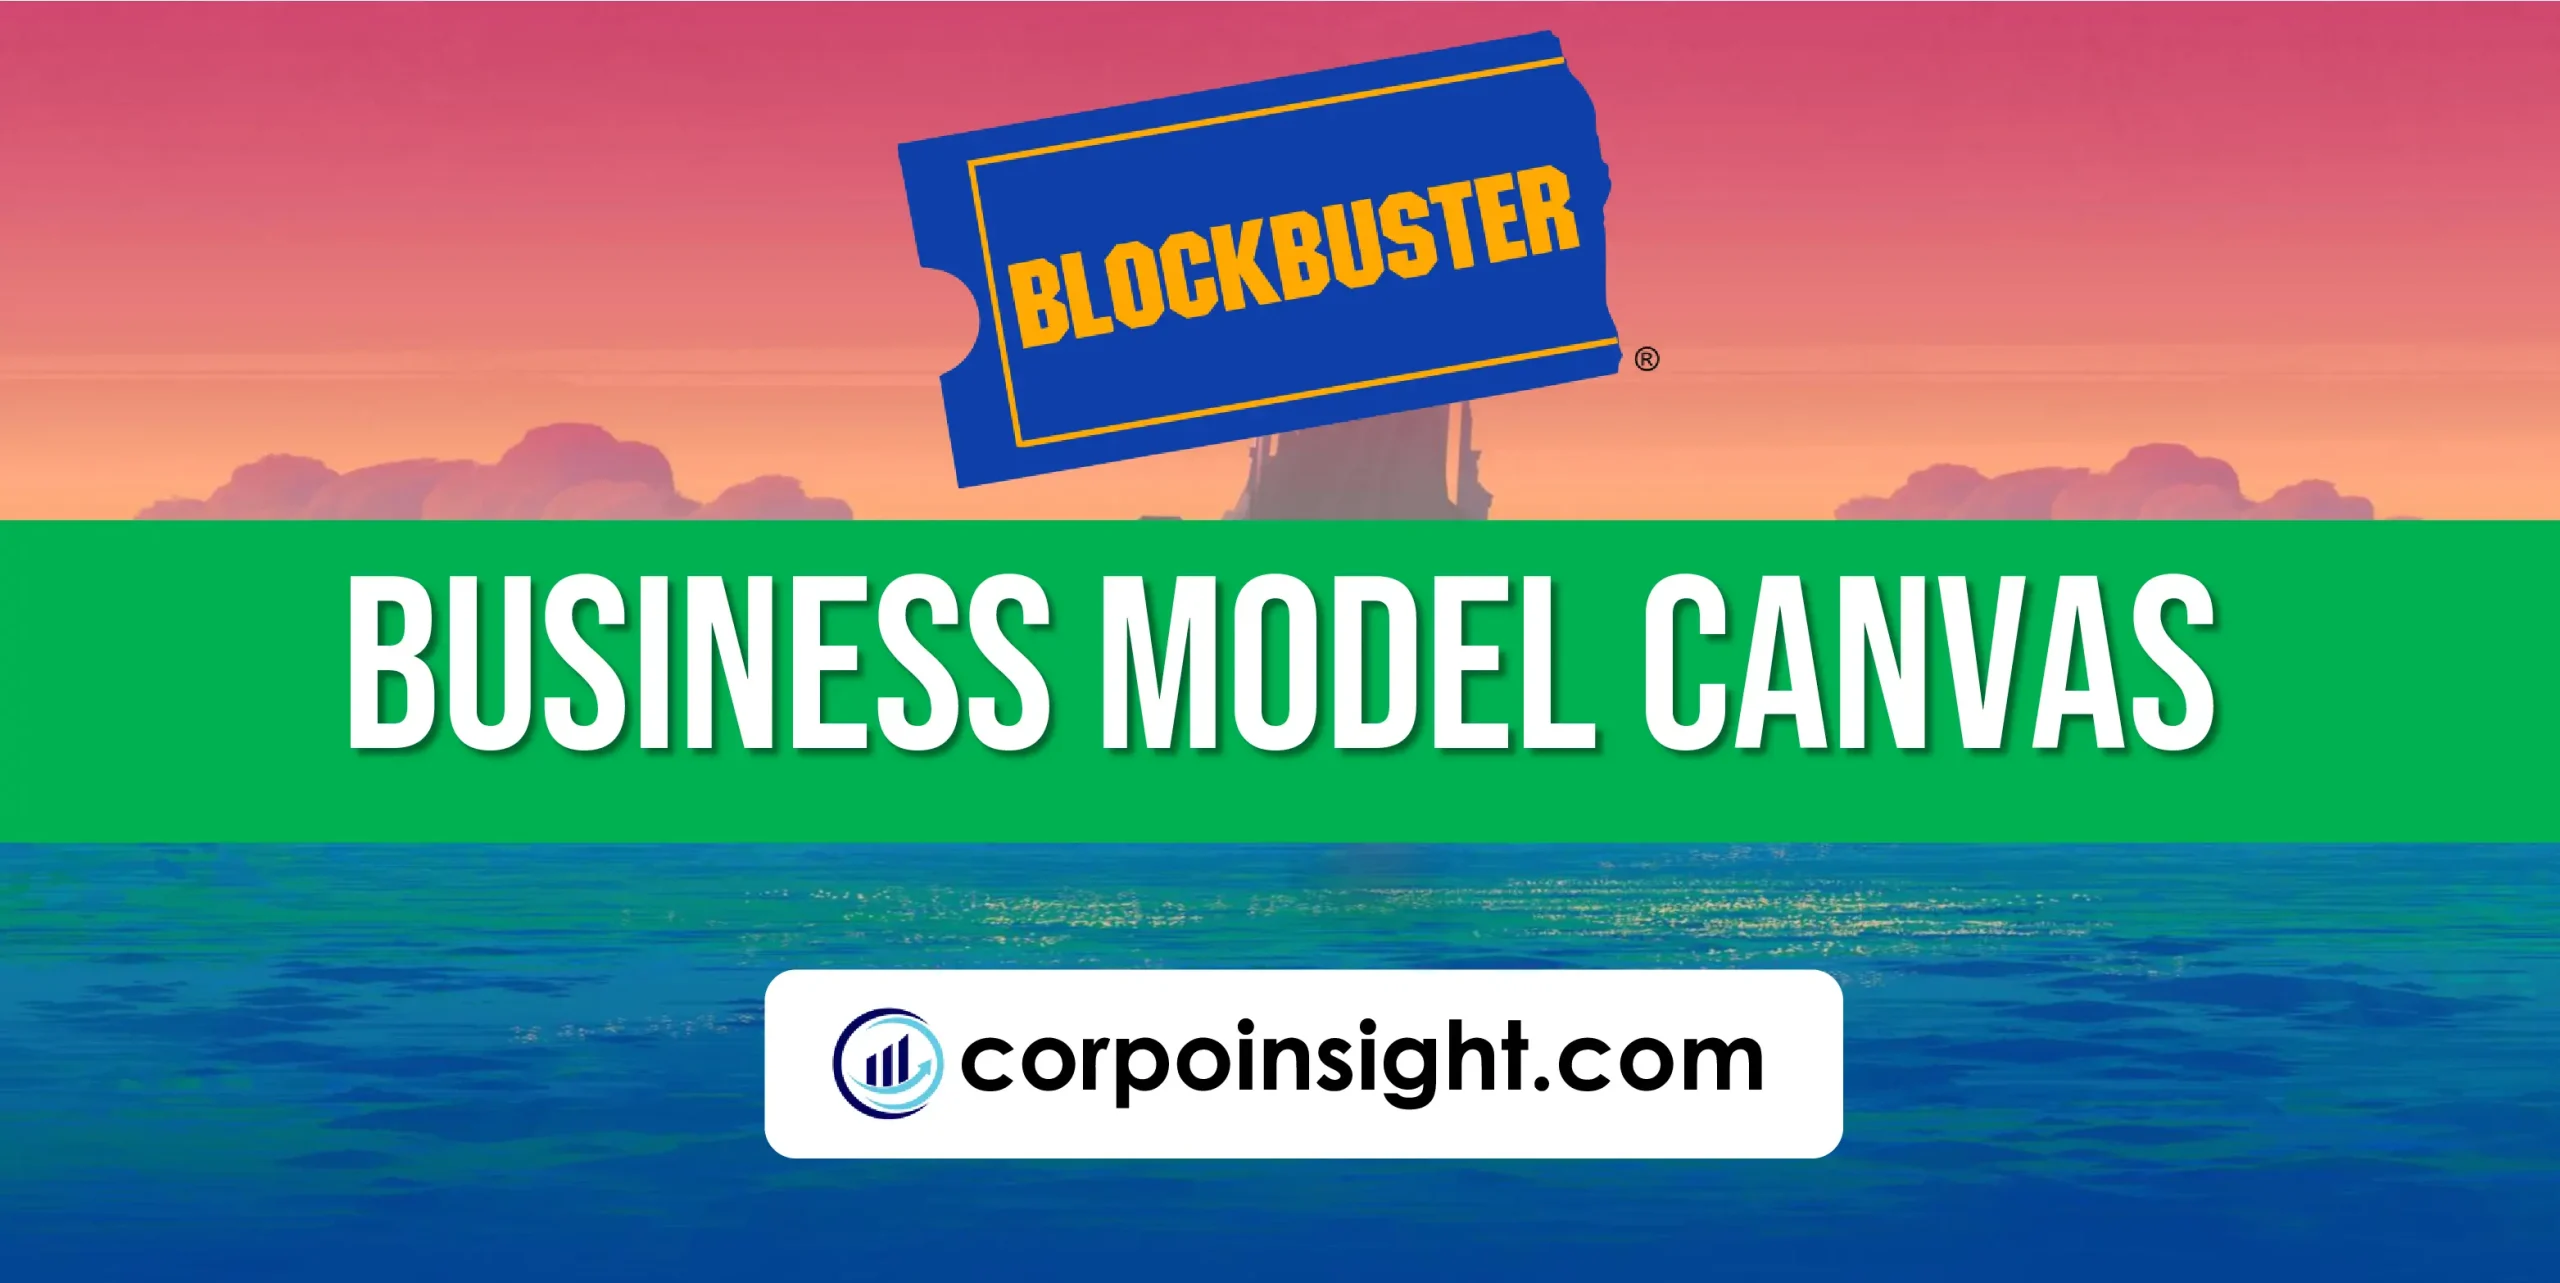 Blockbuster Business Model